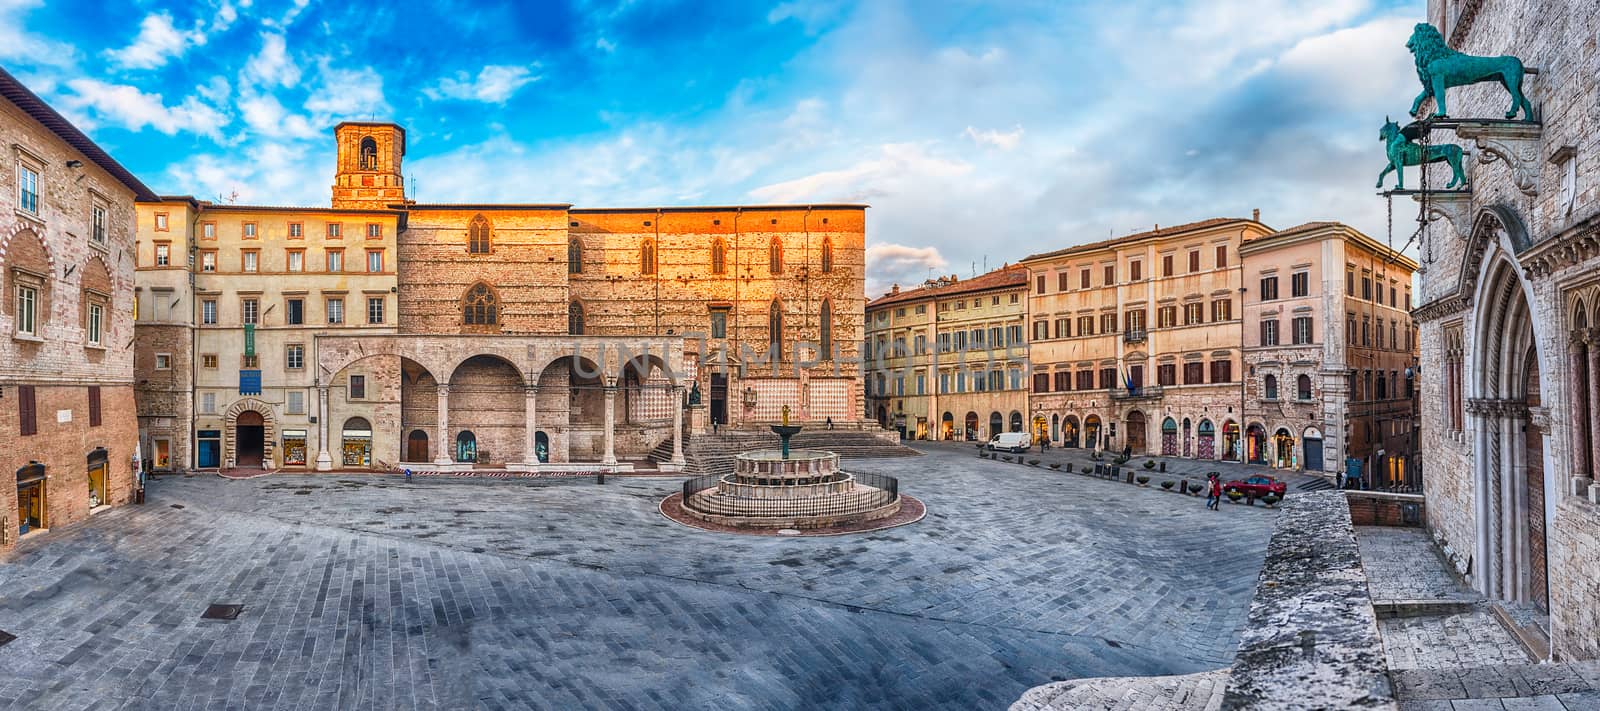 Panoramic view of Piazza IV Novembre, Perugia, Italy by marcorubino